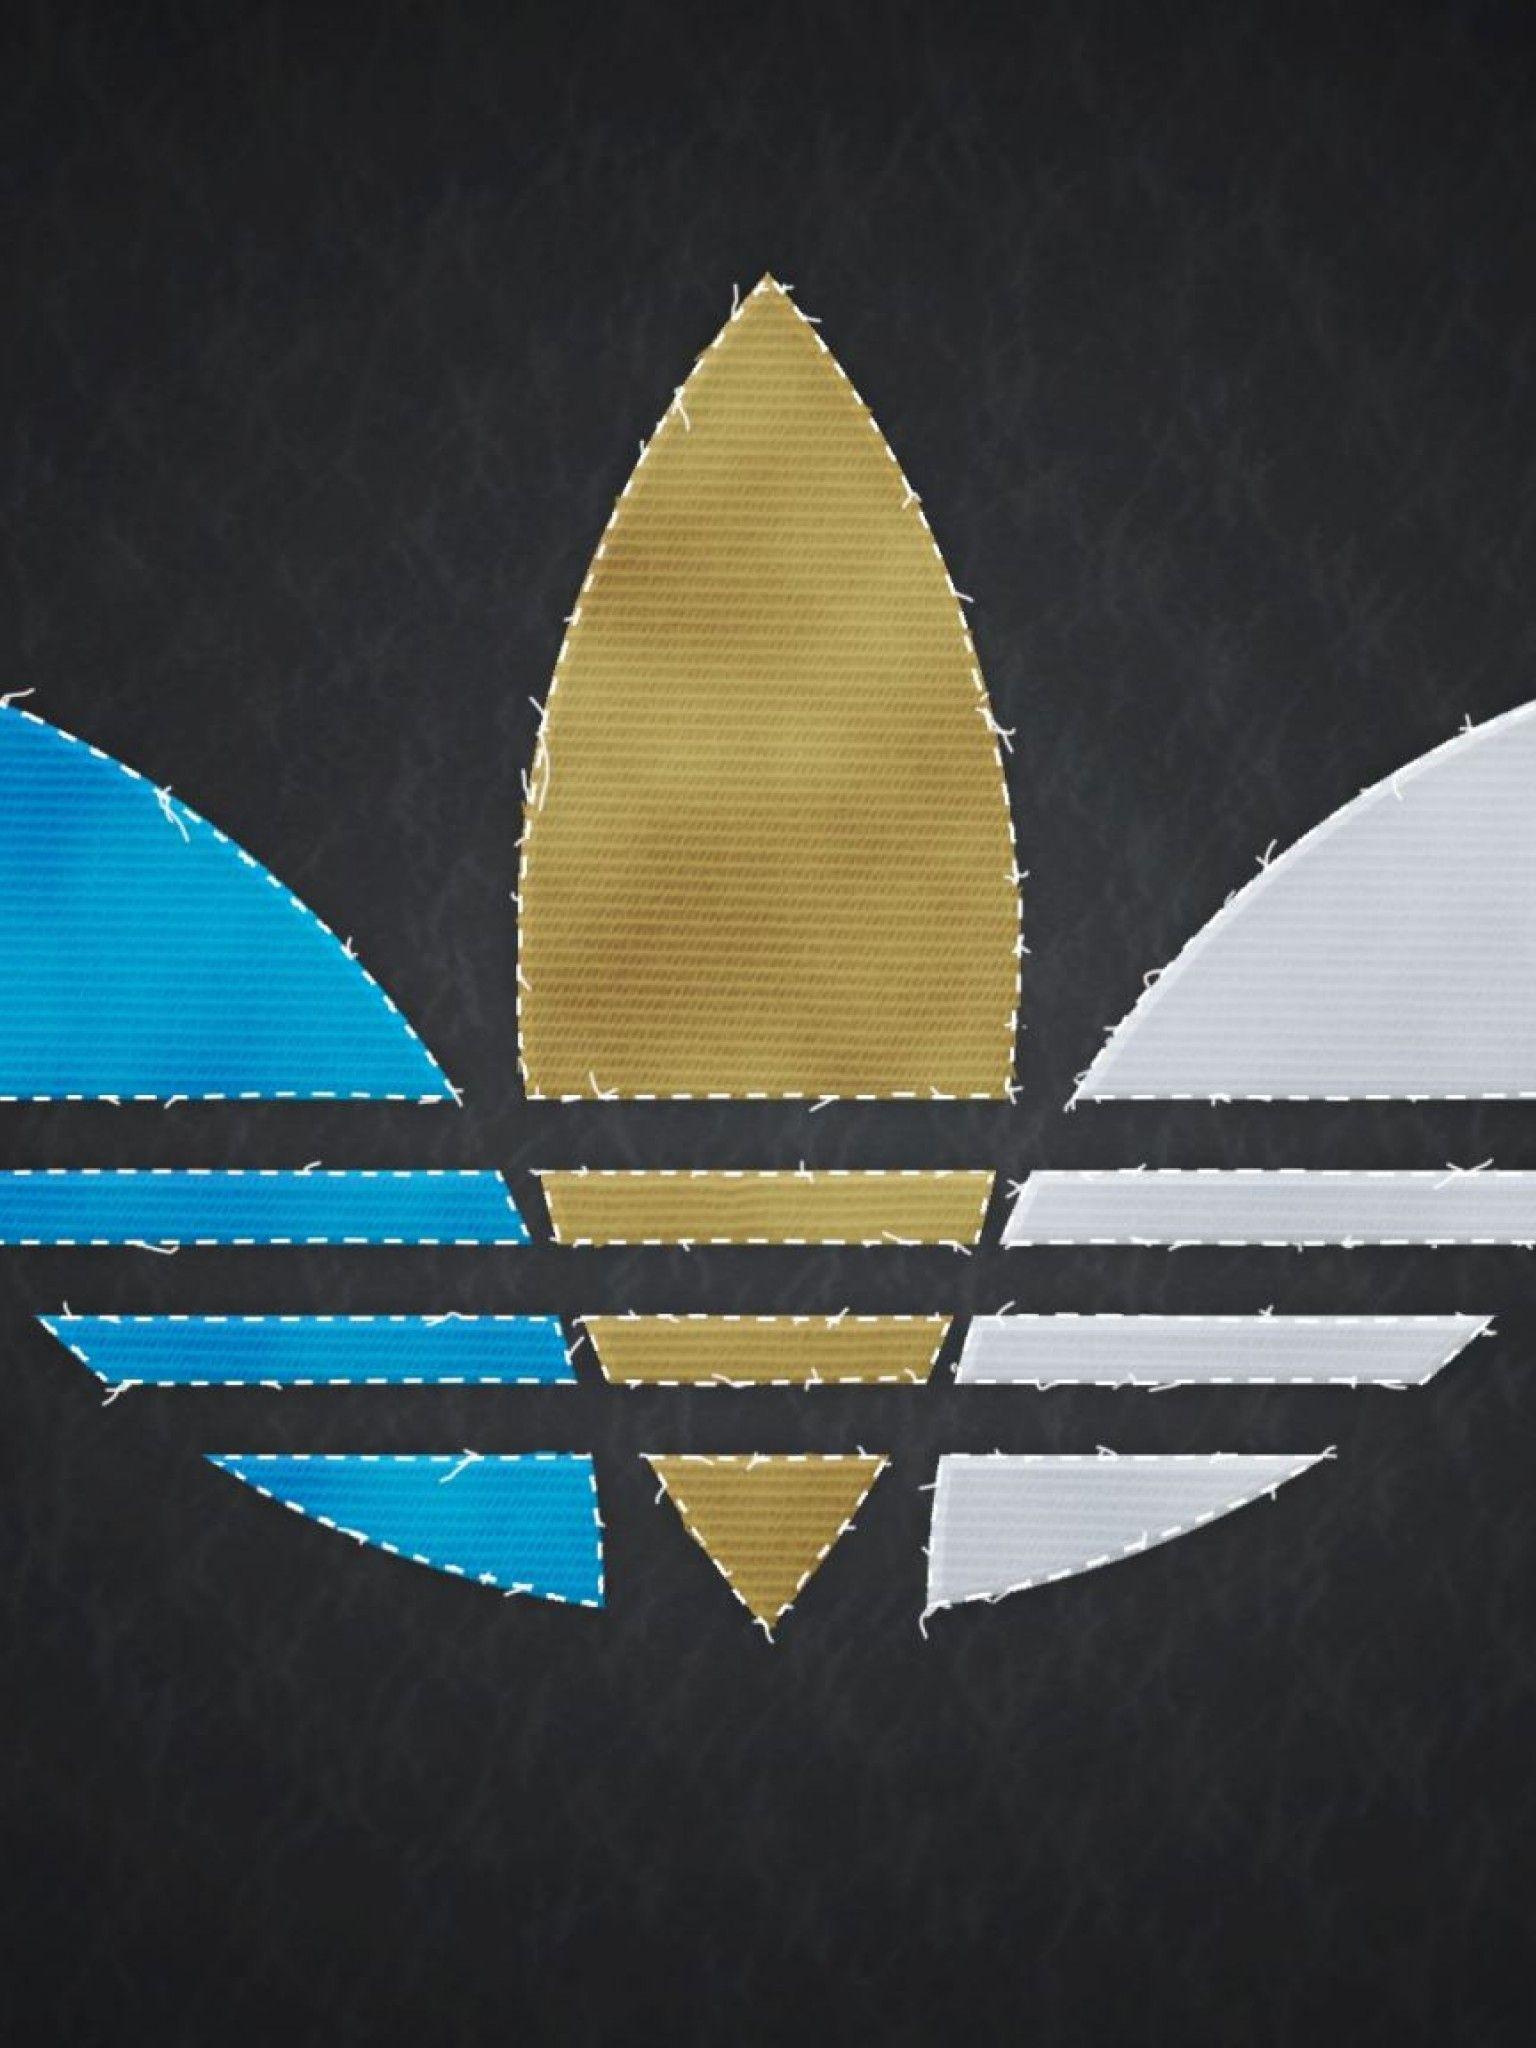 Download Adidas Logo Full HD Background Wallpaper for Desktop